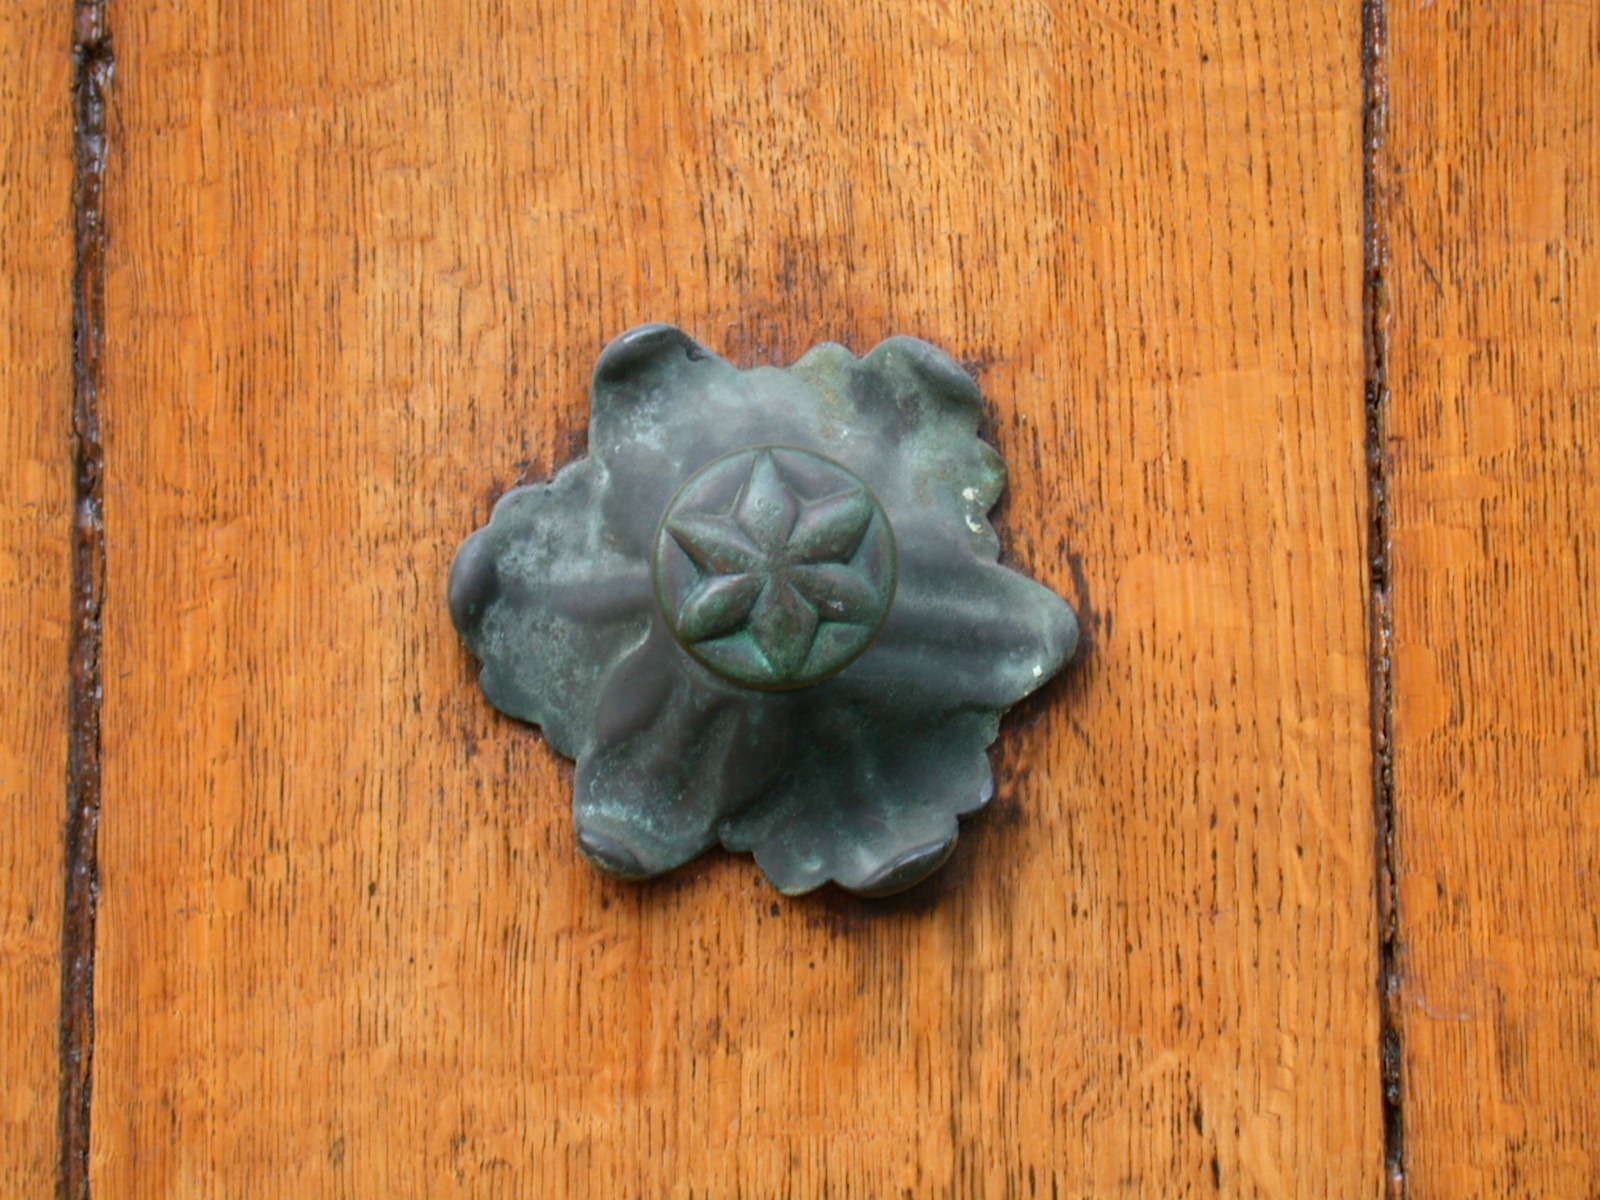 objects metal knob doorknob star tin copper teak wood texture fine painted orange royalty-free